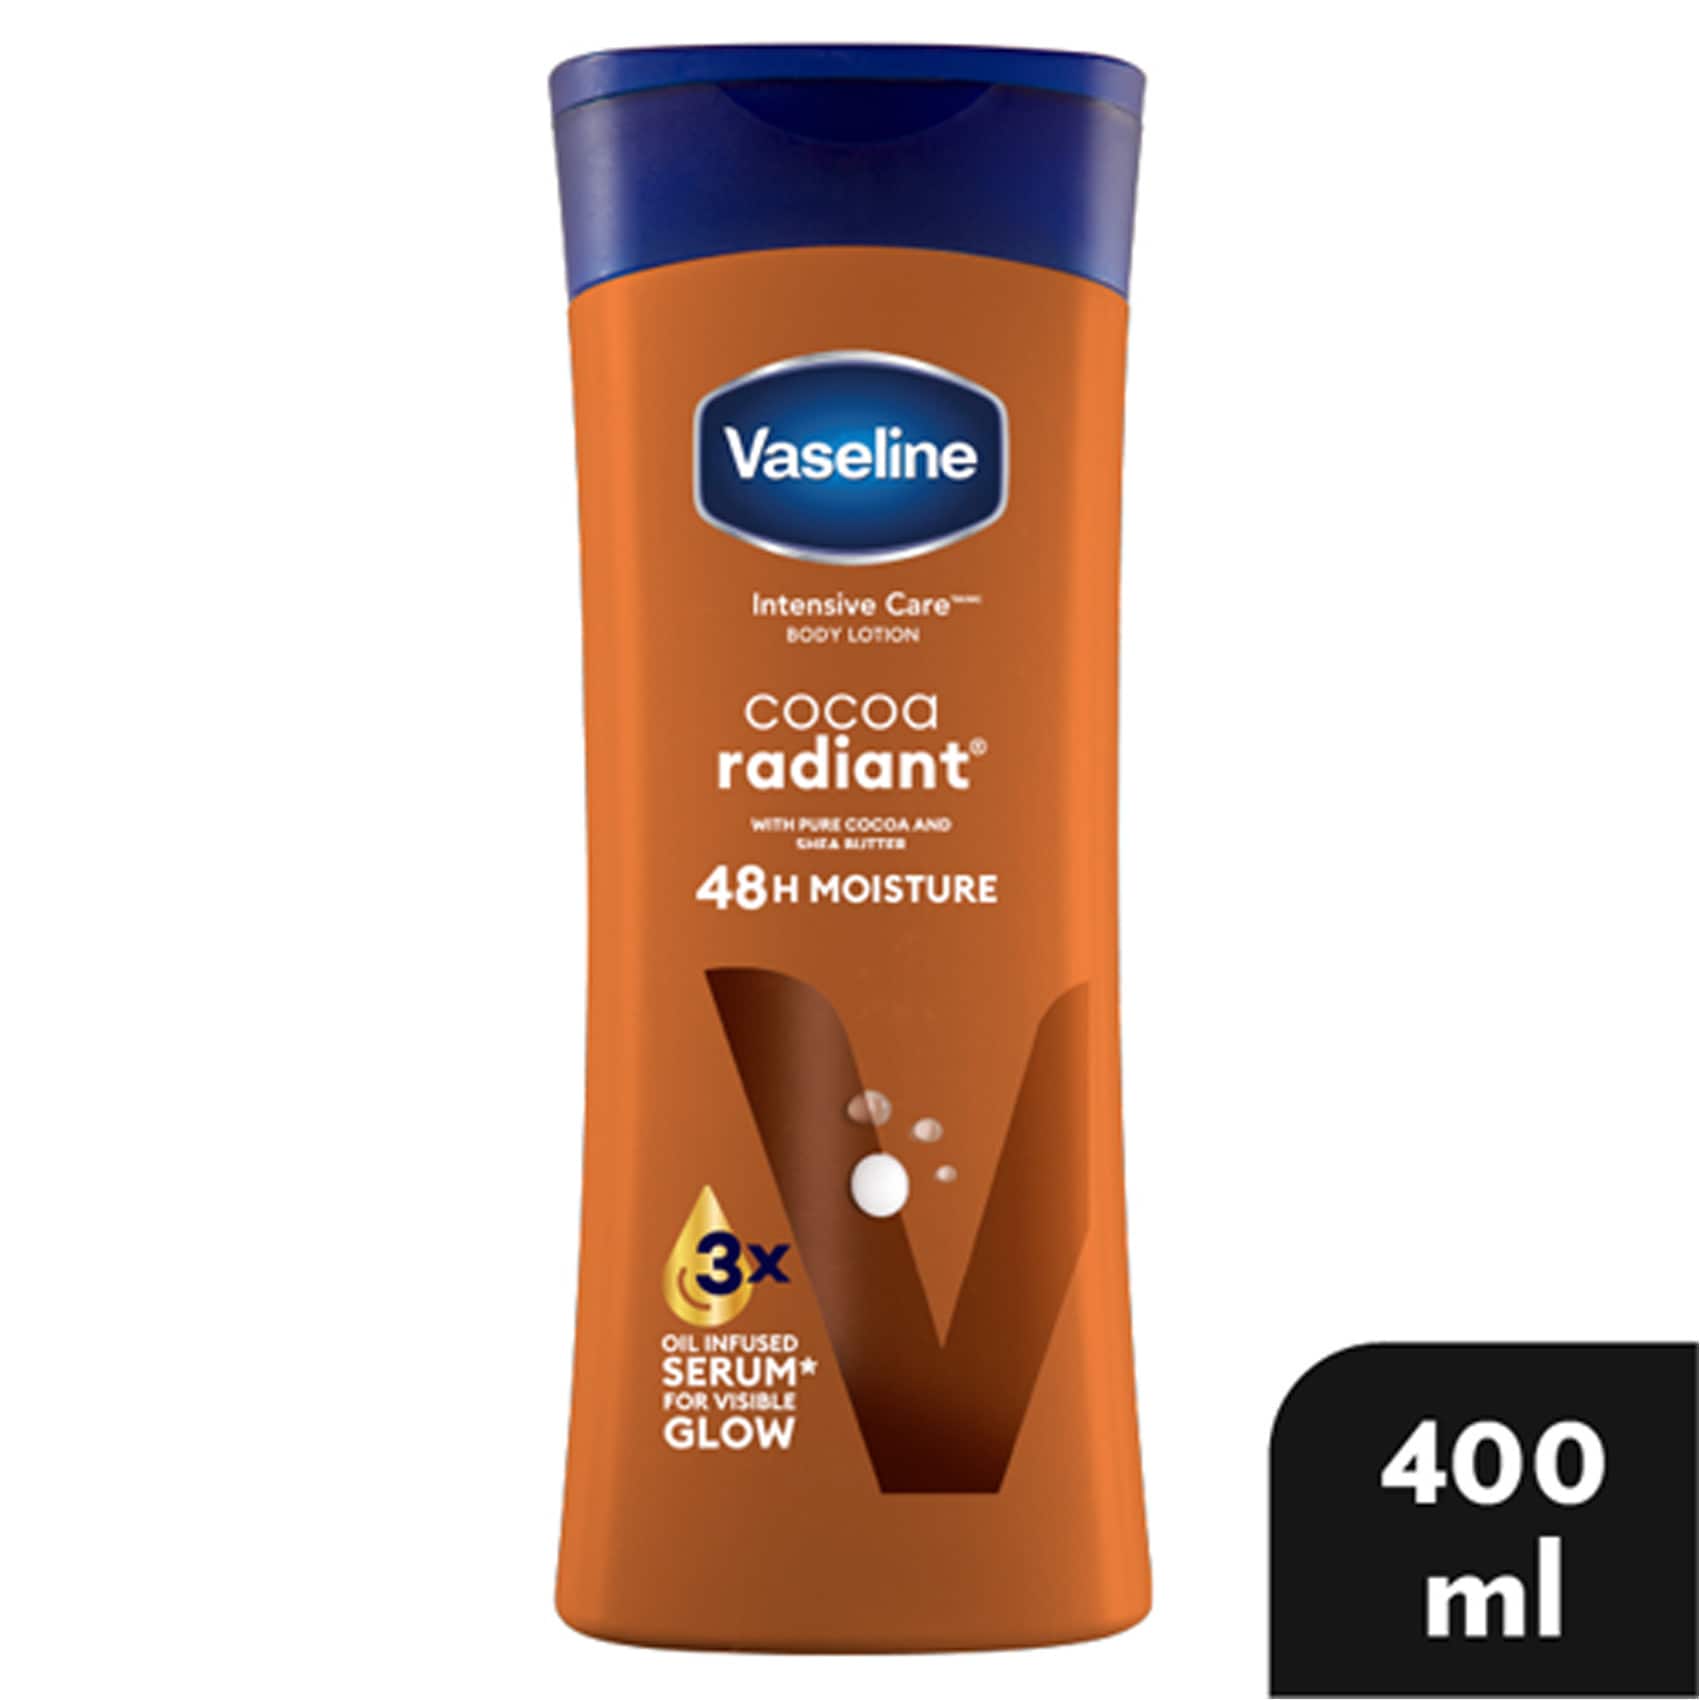 Vaseline Cocoa Radiant Oil Gel 3x 200ml